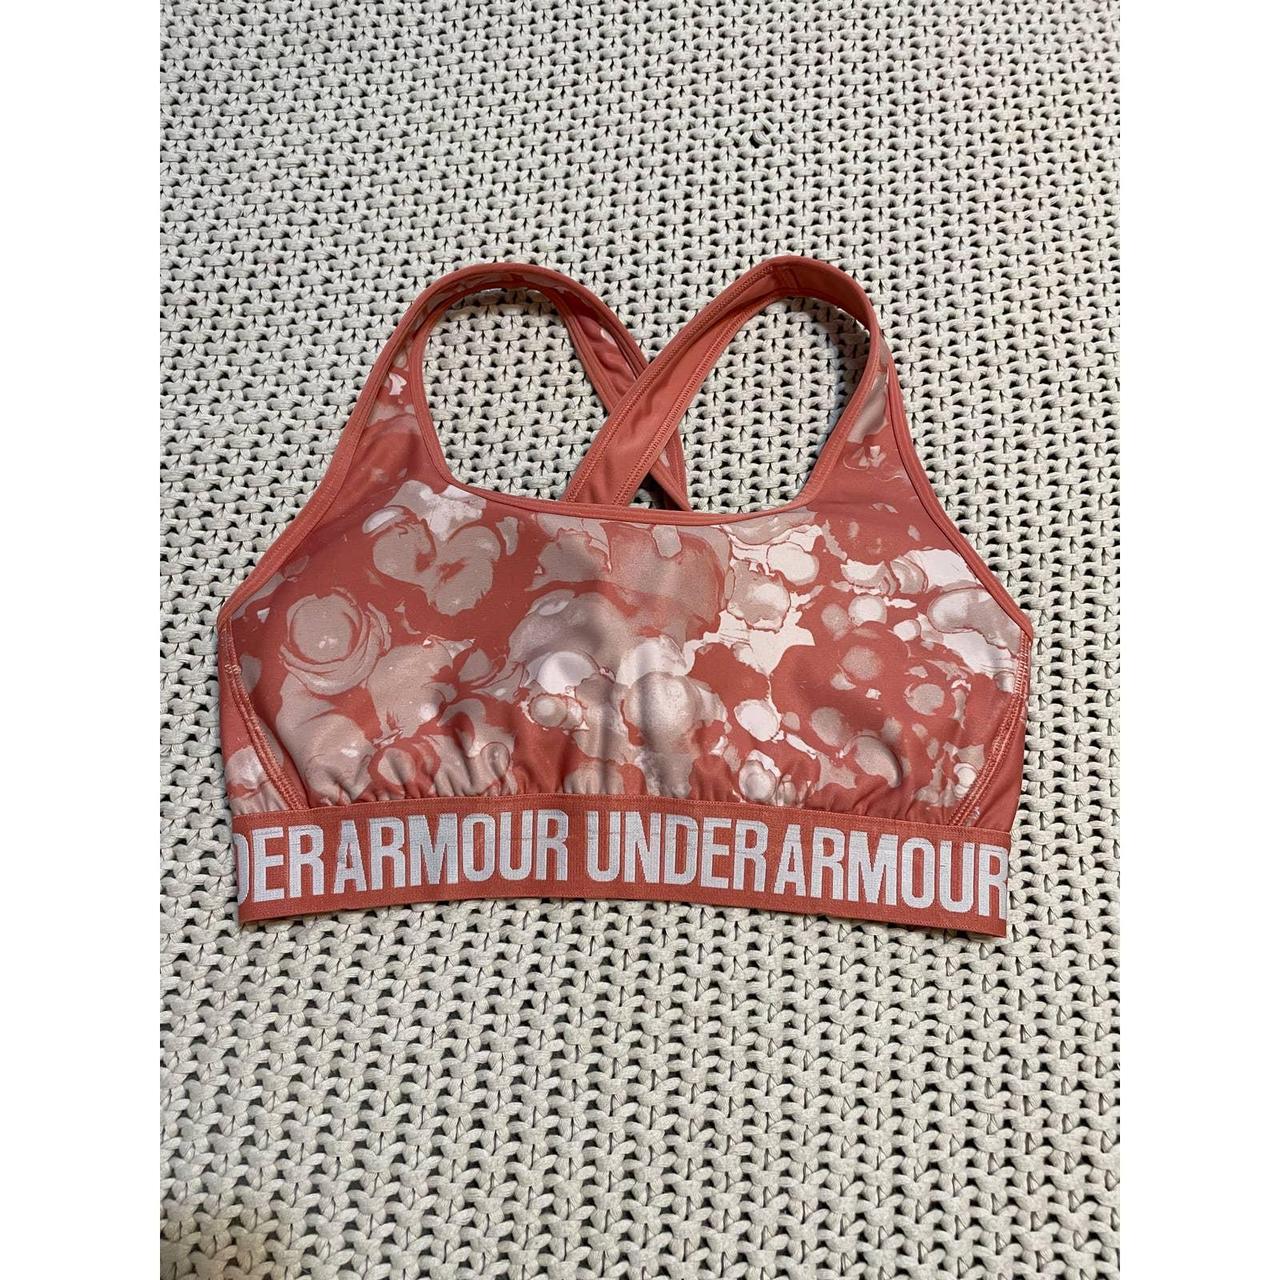 Under Armour sports bra size M salmon pink fully - Depop